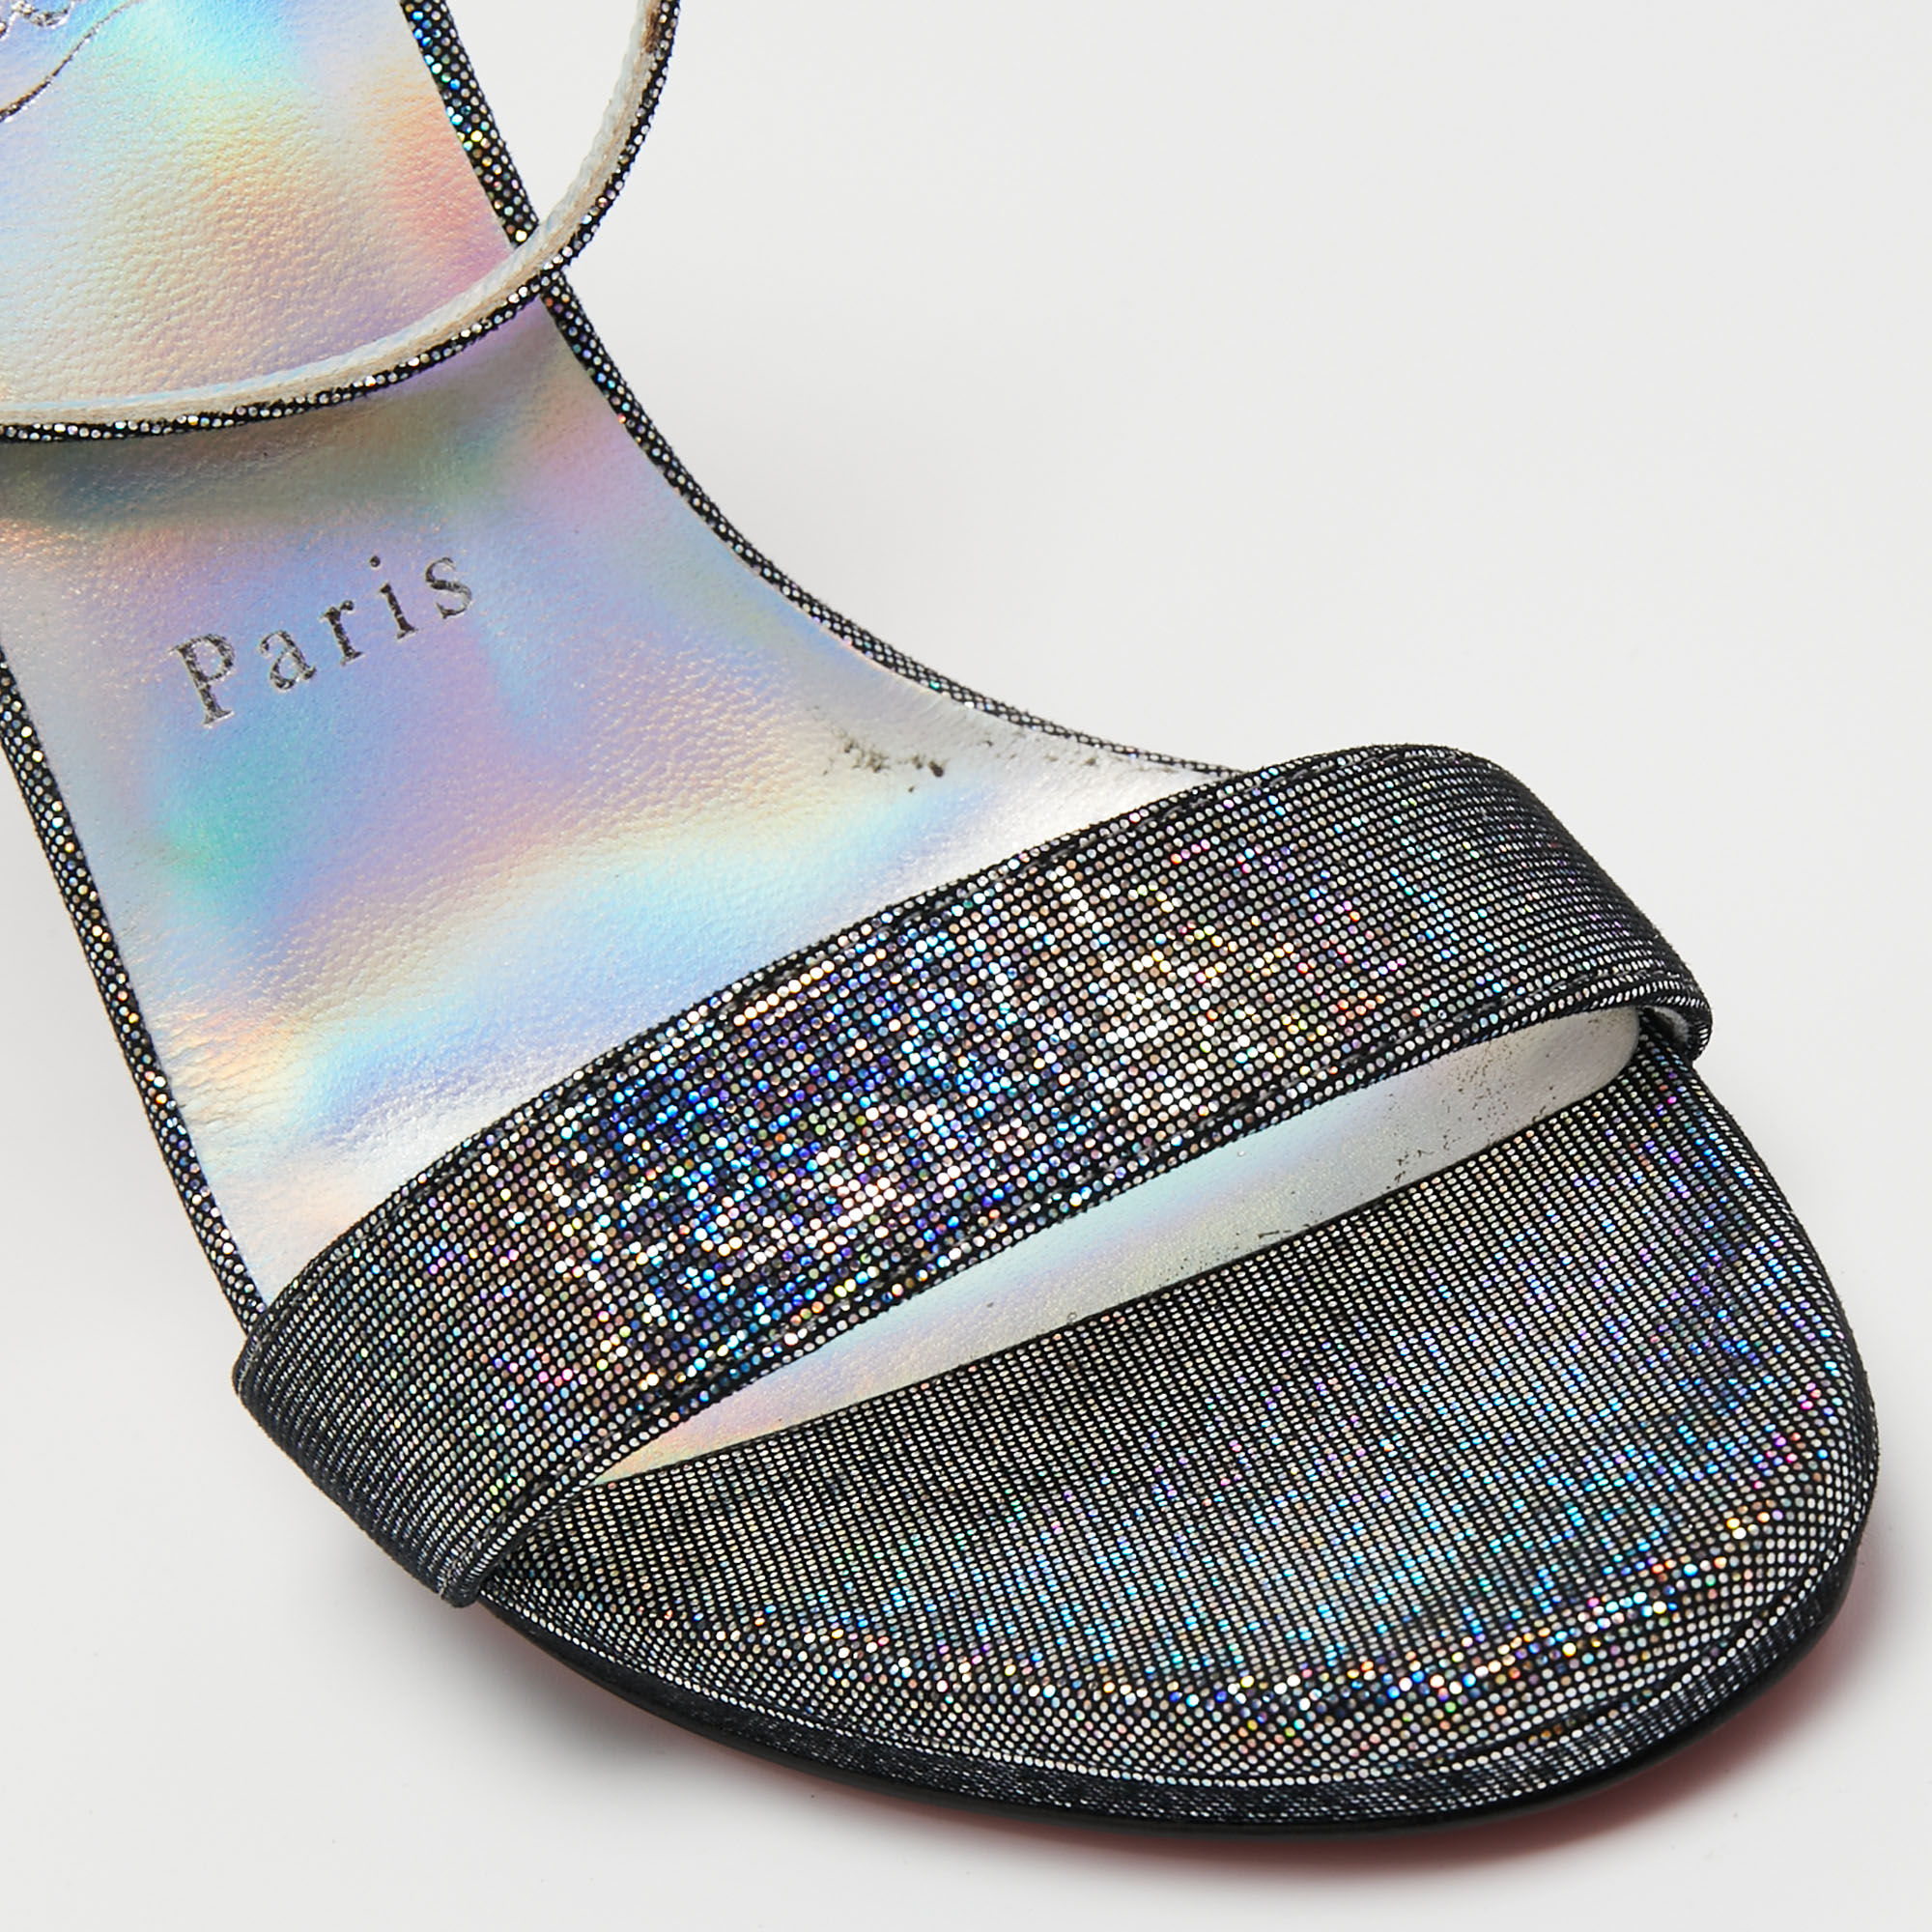 Christian Louboutin Multicolor Glitter Loubi Queen Sandals Size 38.5